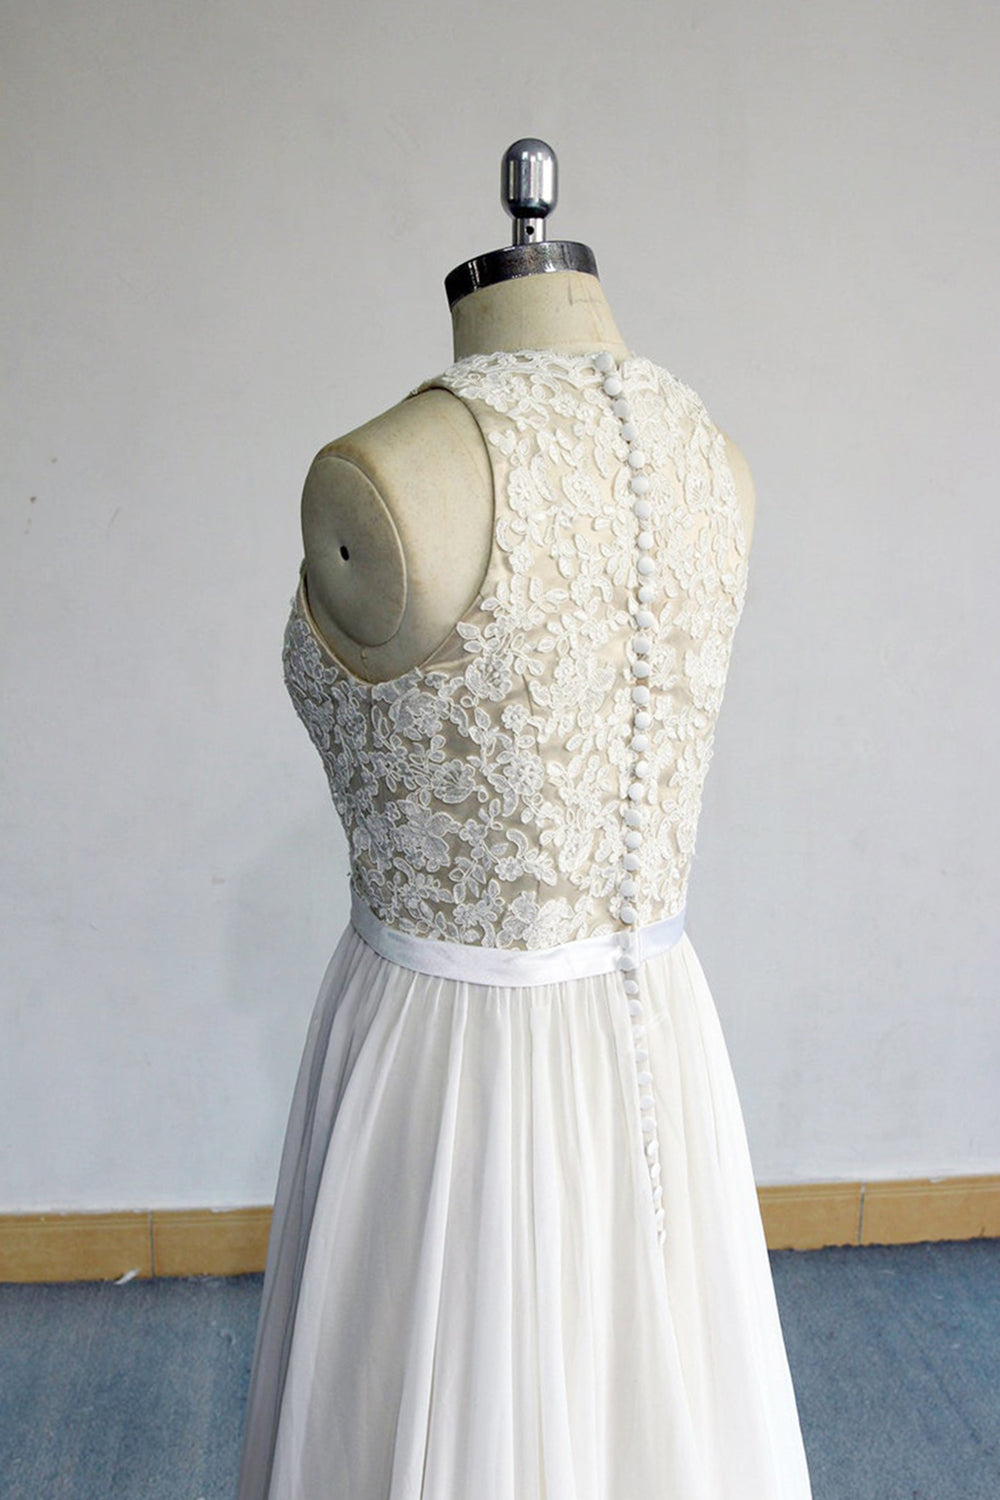 Glamorous White Appliques Chiffon Wedding Dress Sleeveless Ruffles A-line Bridal Gowns On Sale-27dress